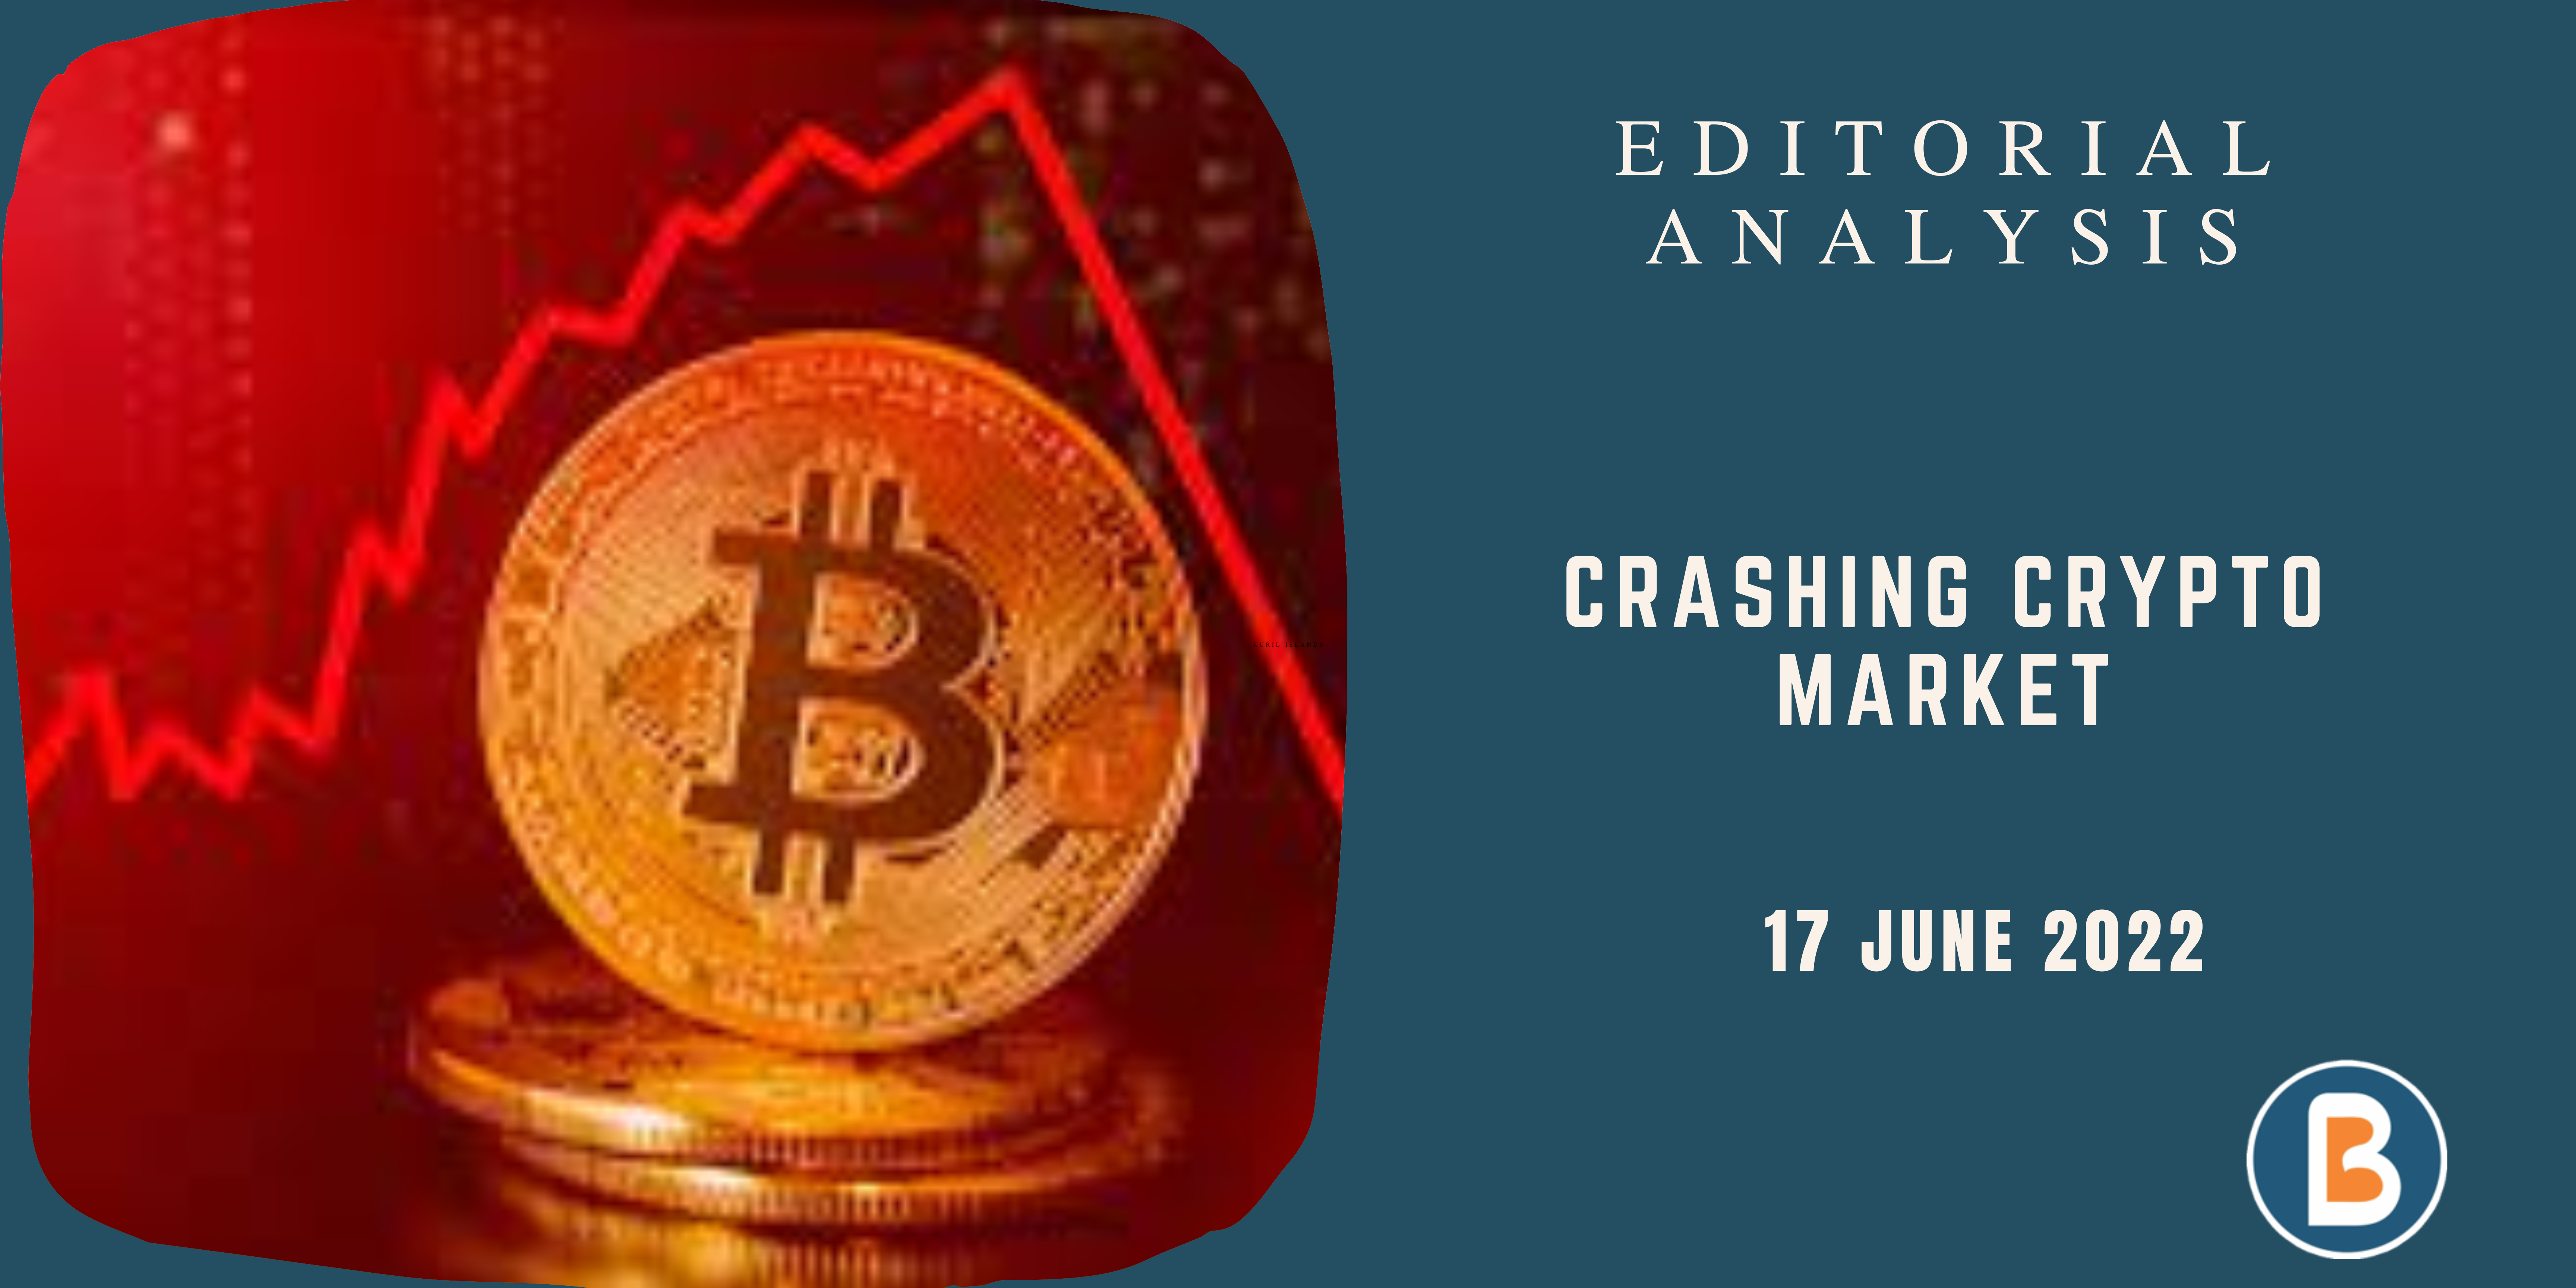 Editorial Analysis for Civil Services - Crashing Crypto Market